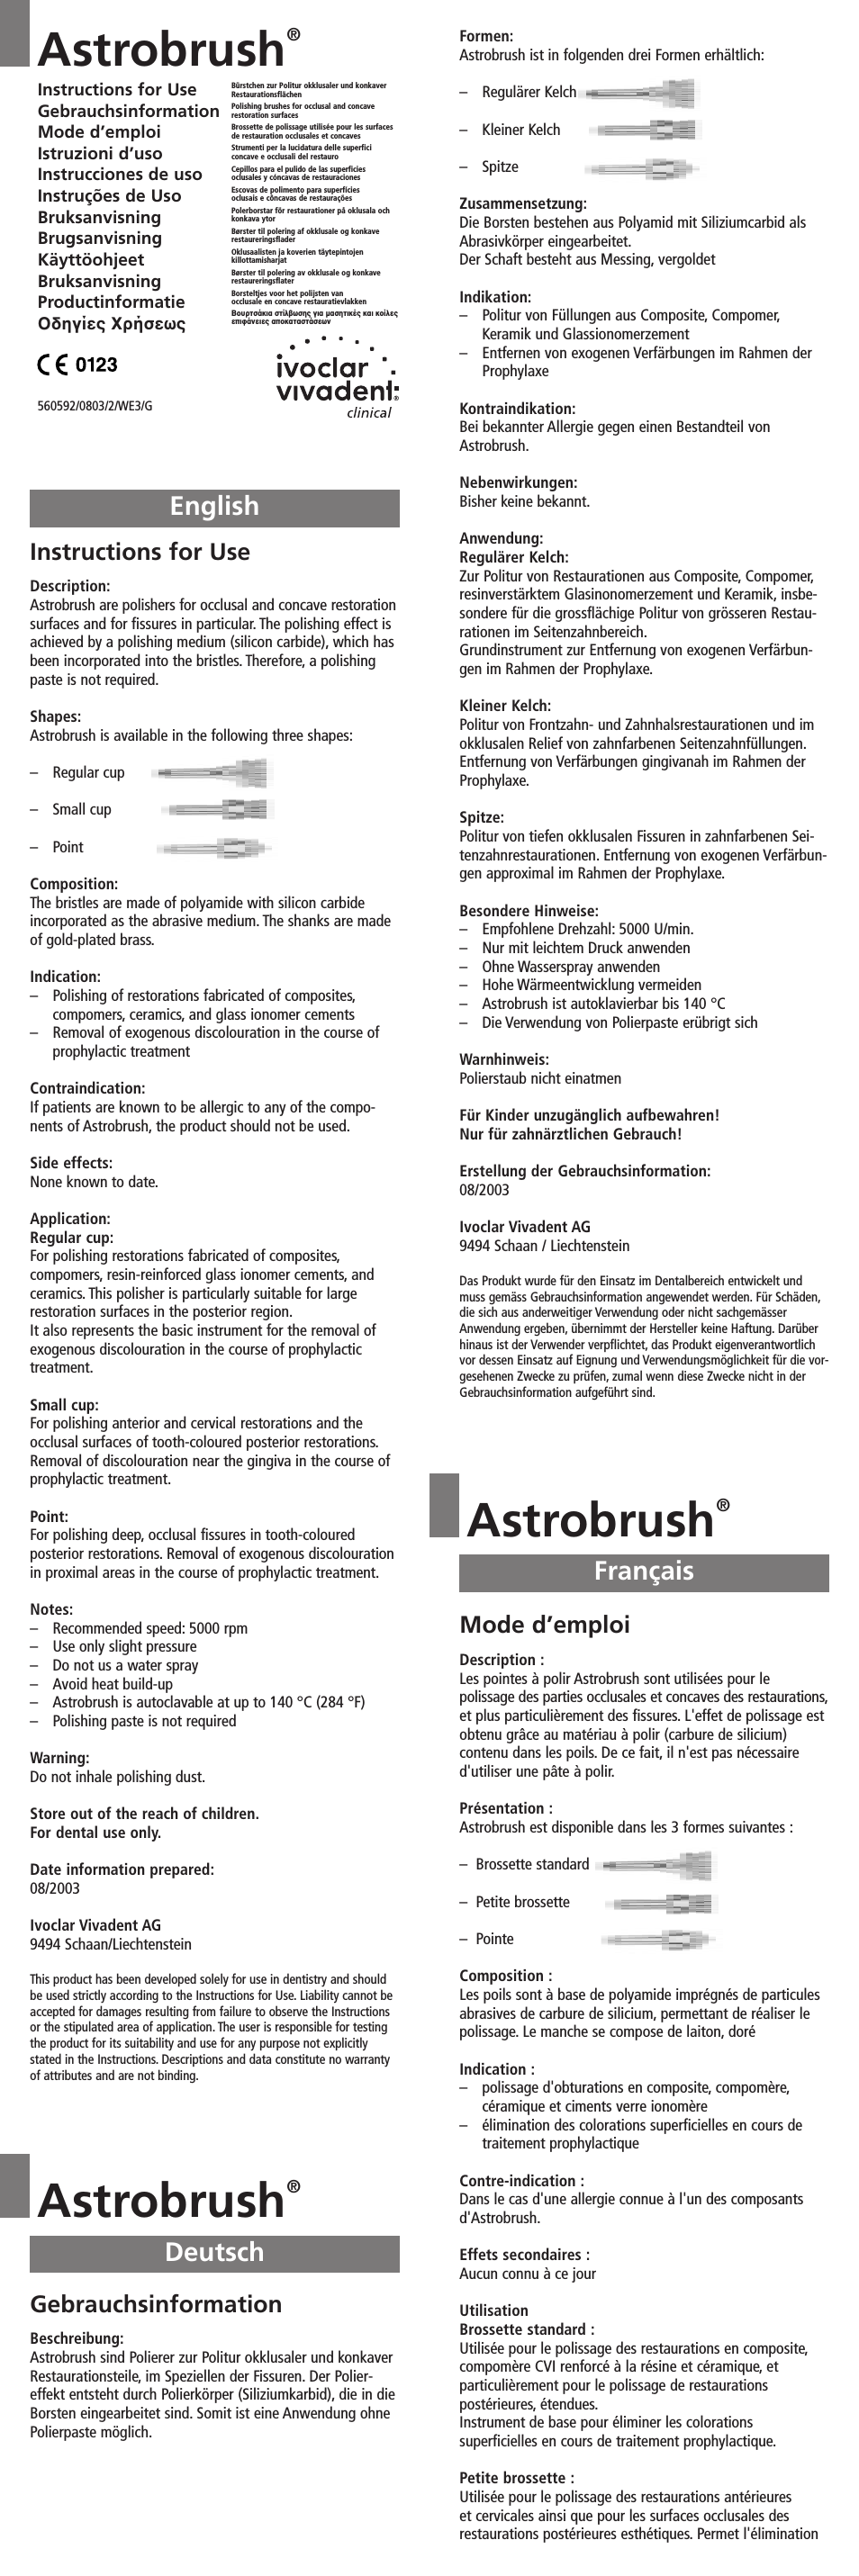 Astrobrush